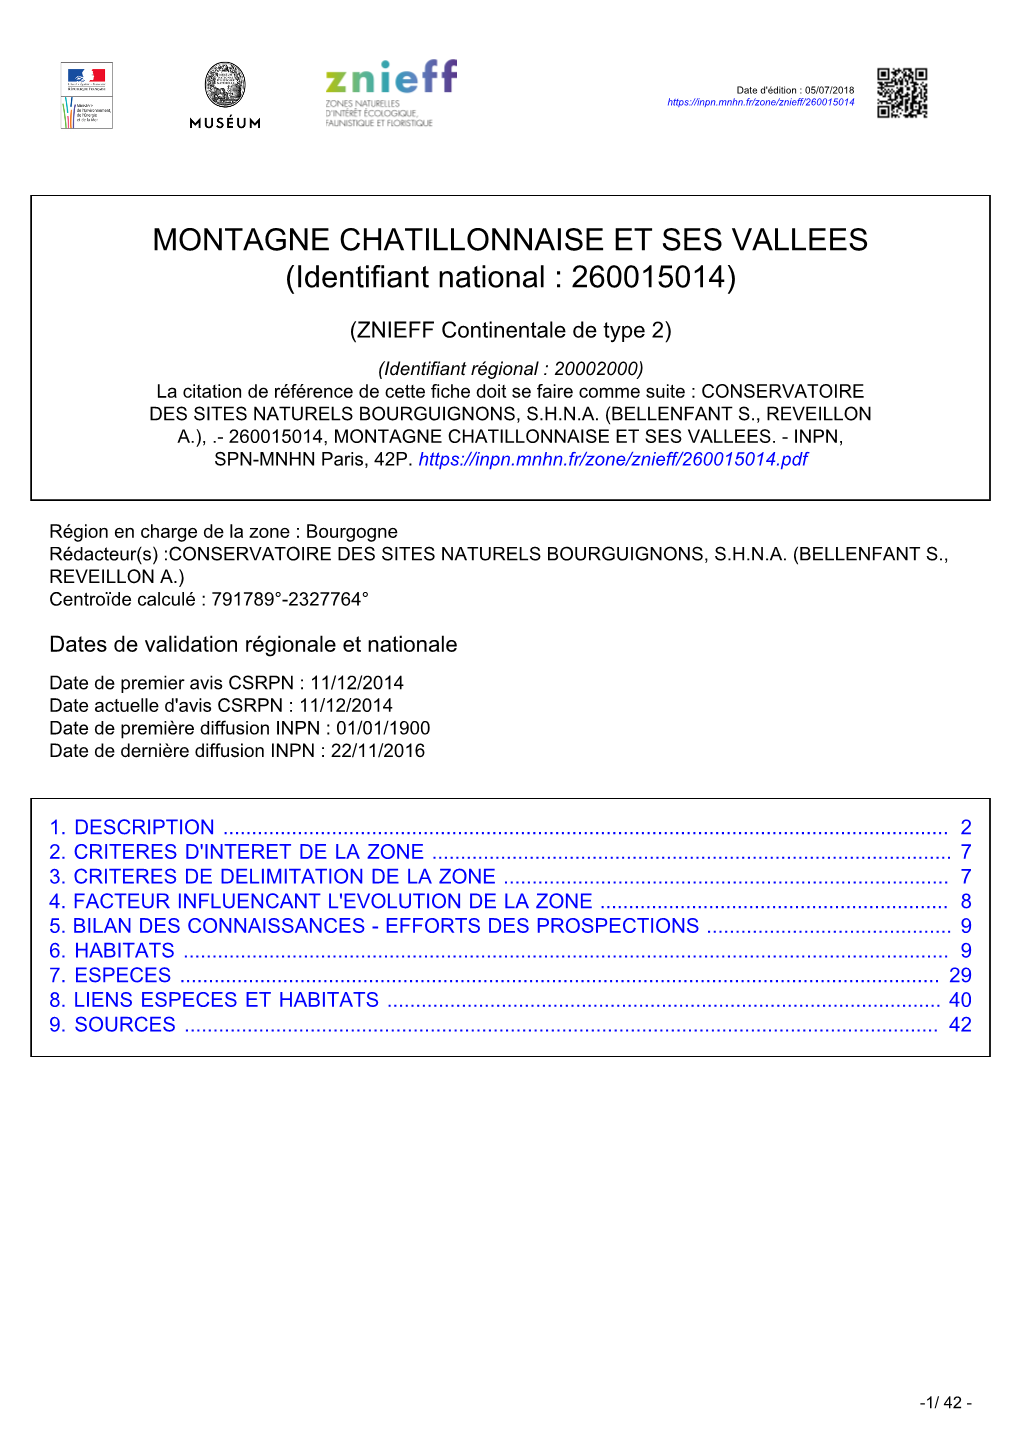 MONTAGNE CHATILLONNAISE ET SES VALLEES (Identifiant National : 260015014)